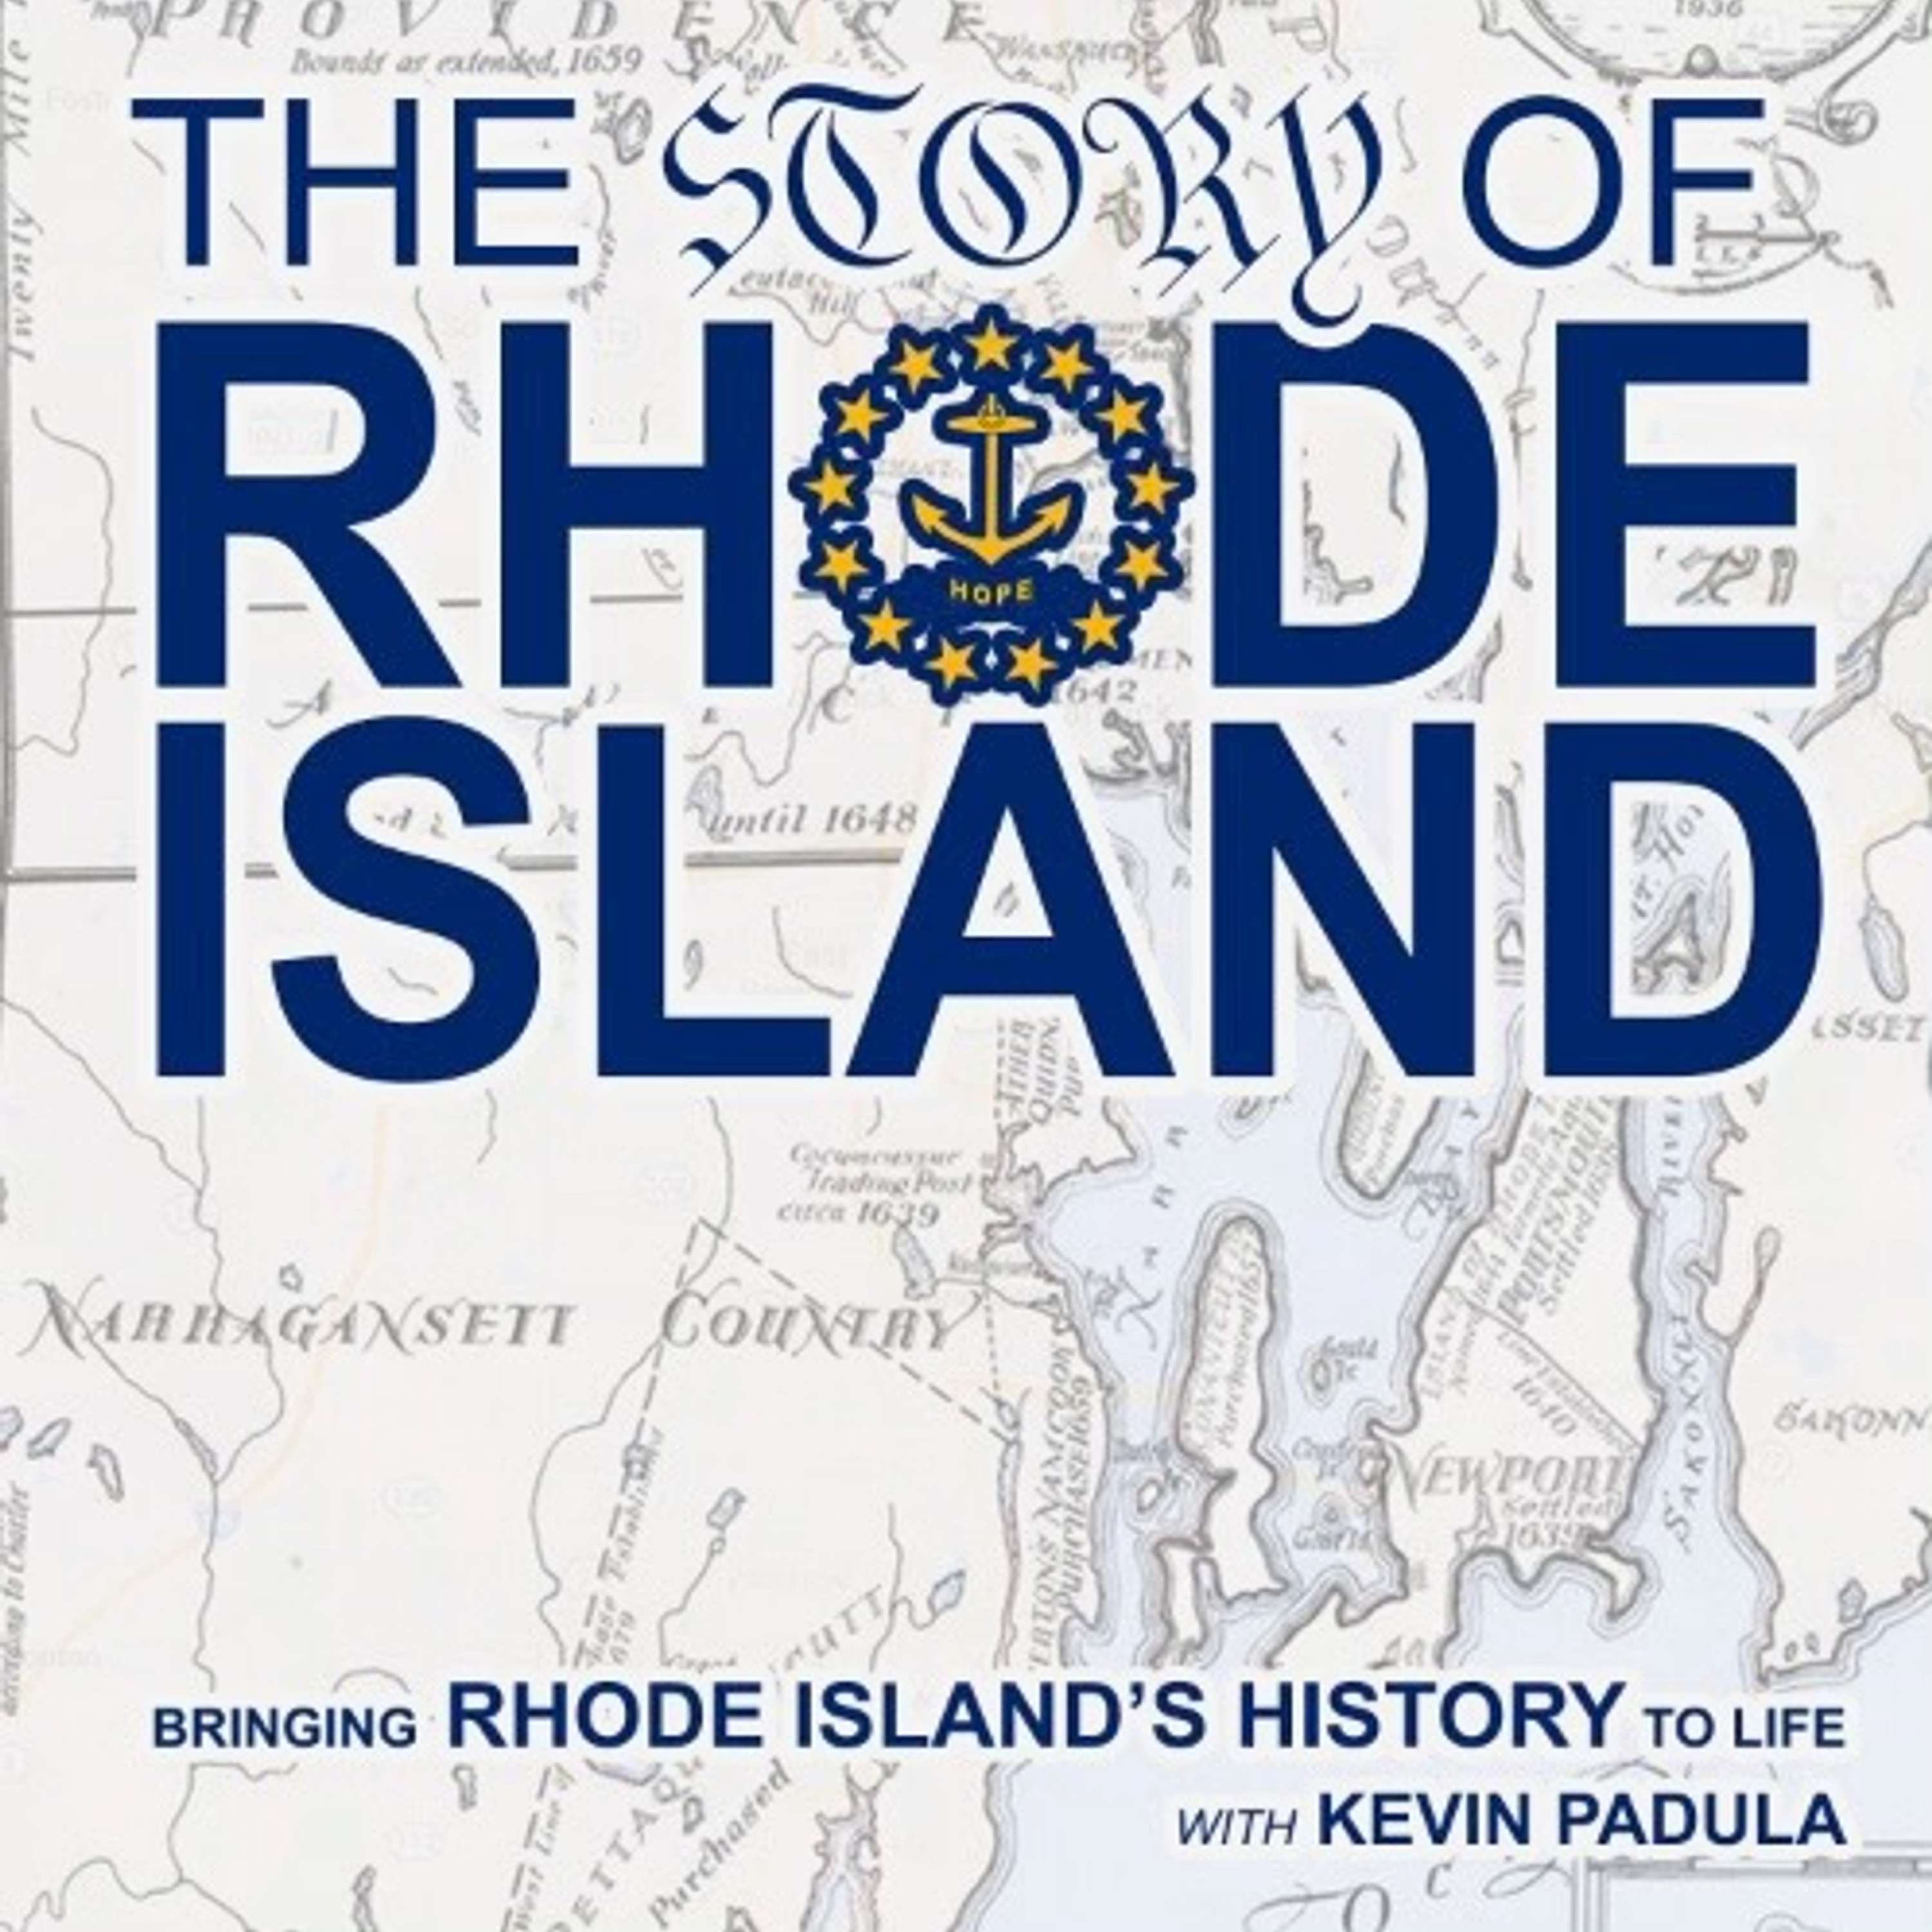 BONUS - Slavery in Rhode Island Part 1